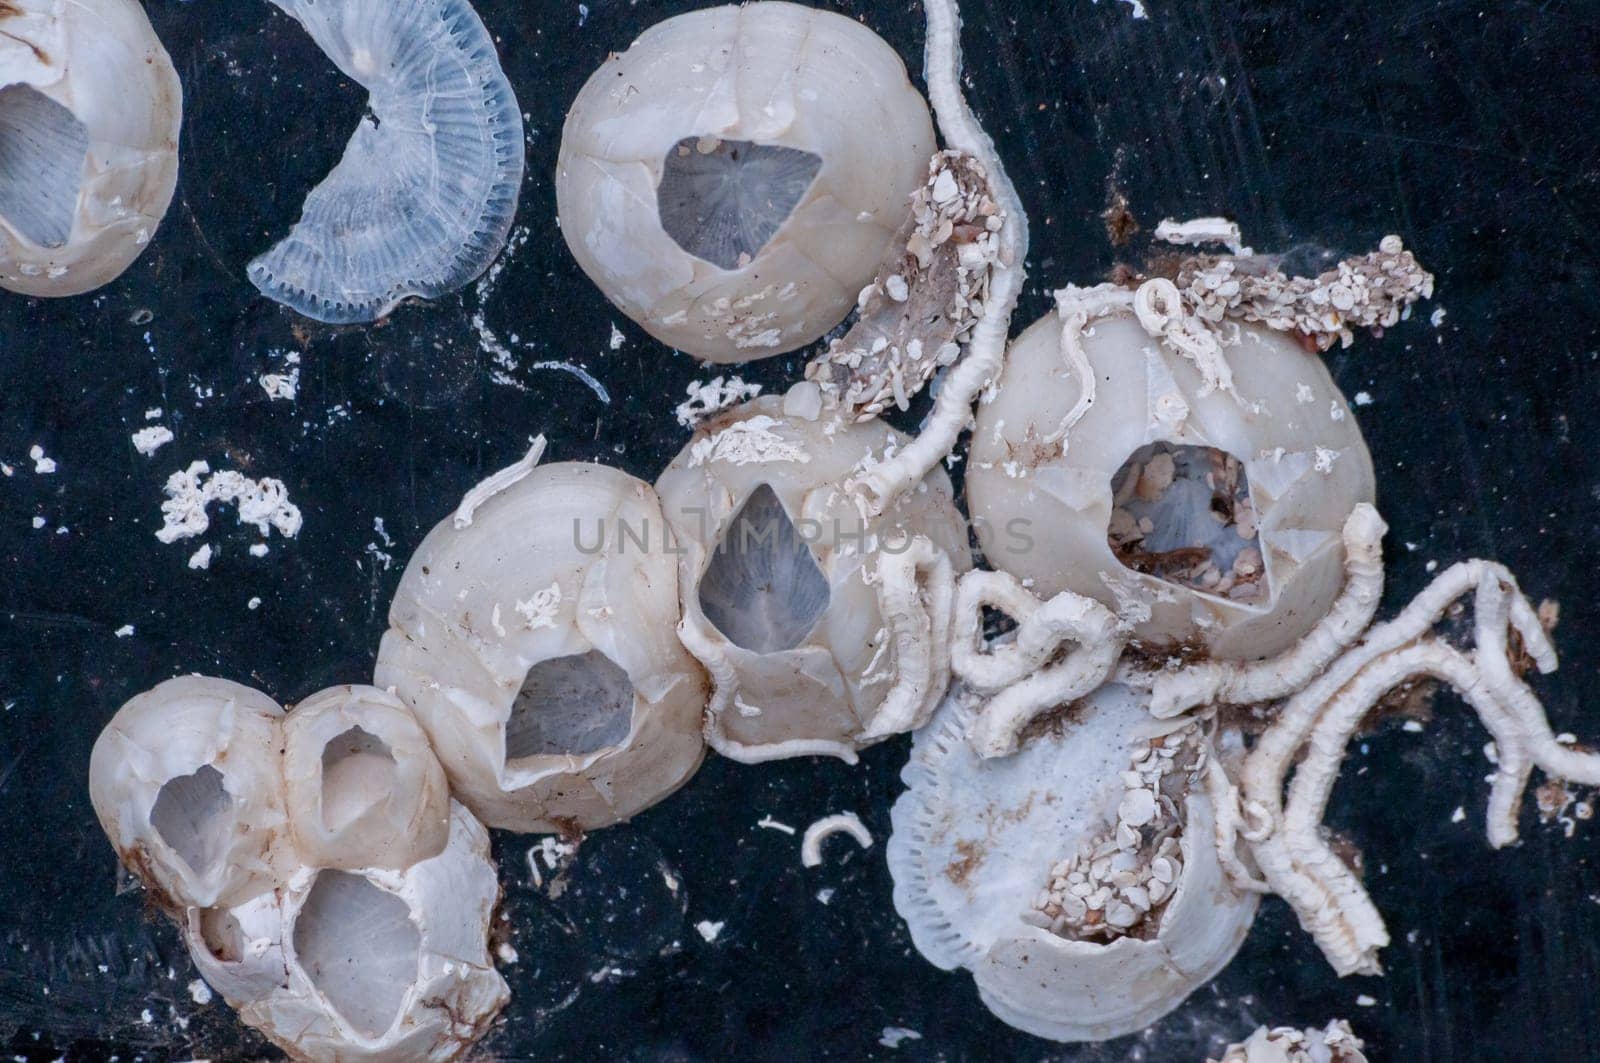 Empty shellfish (Balanus sp.) and white tubules of sea worms